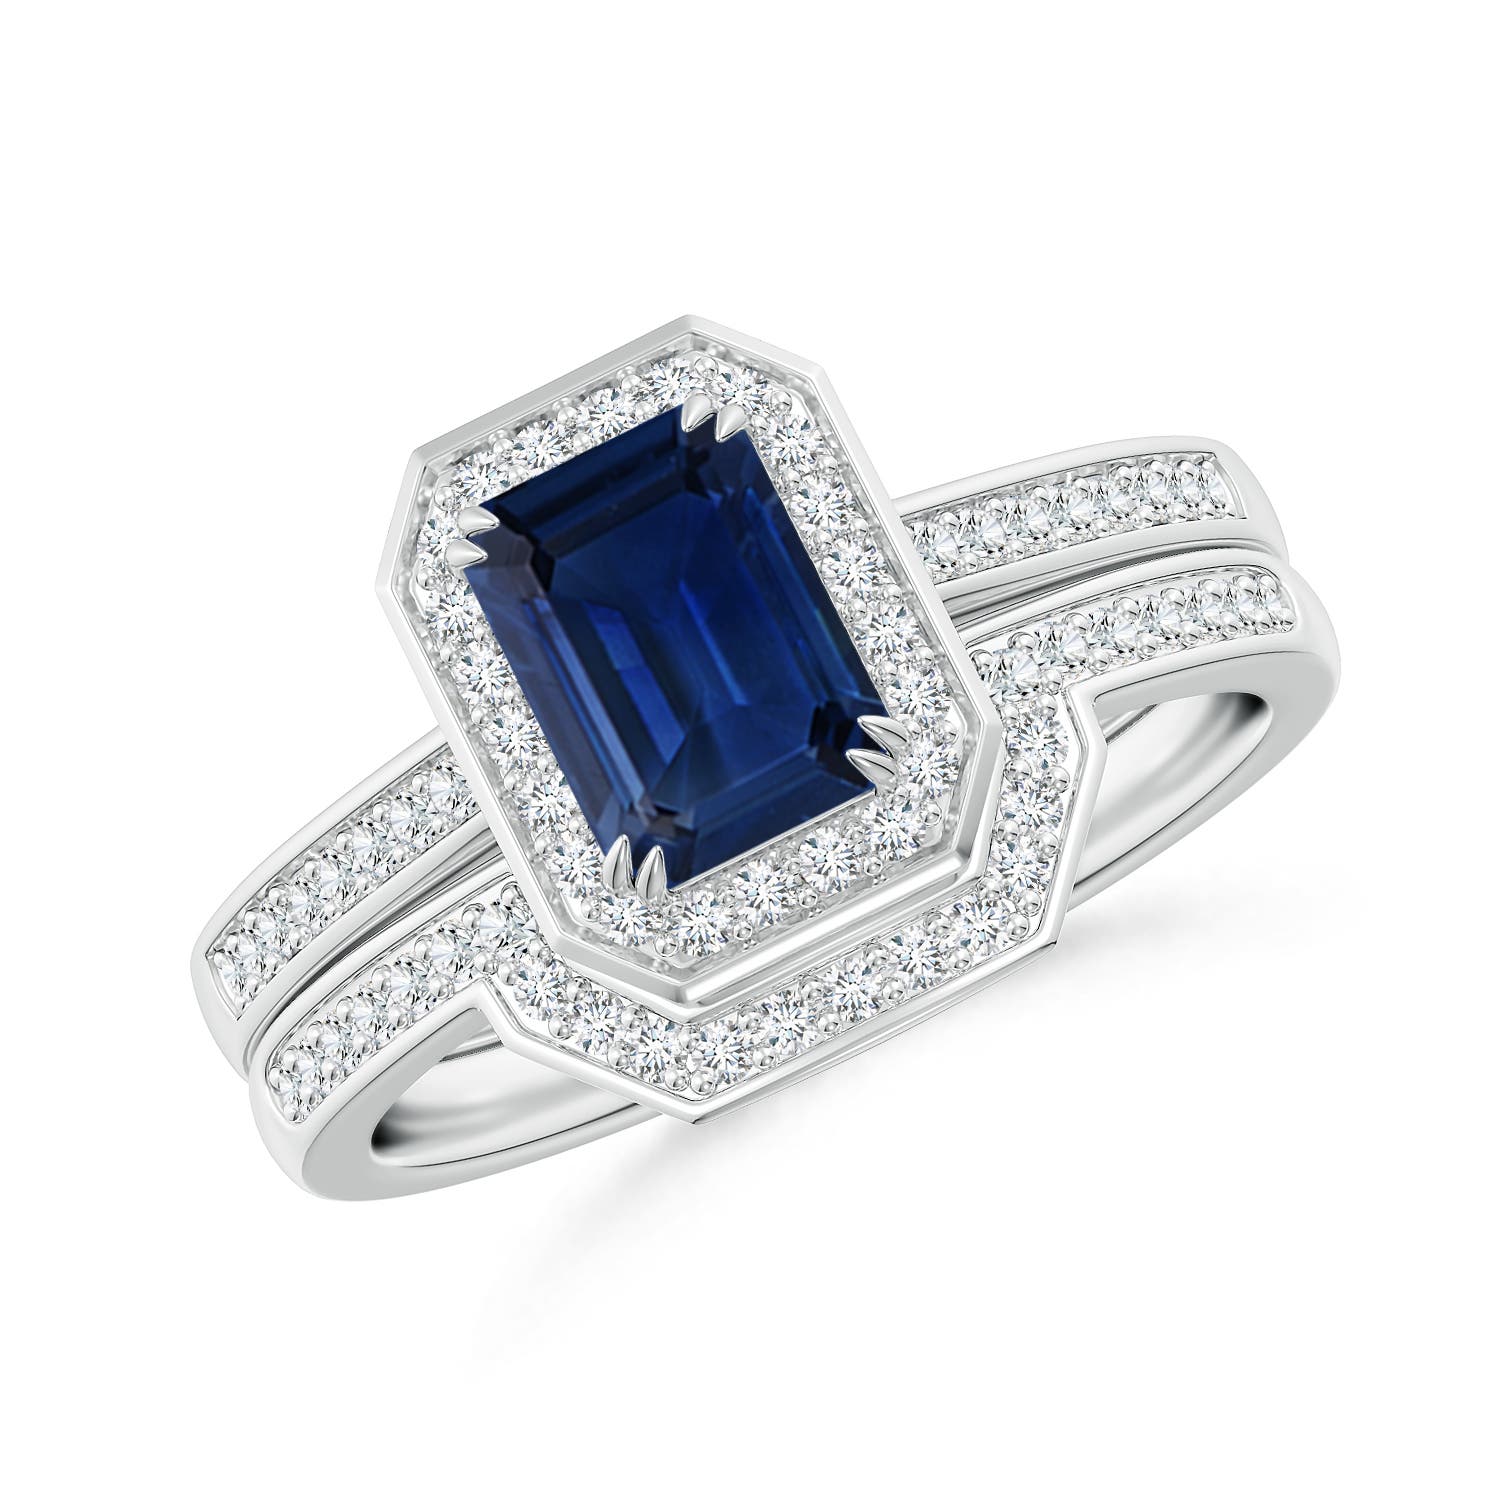 Emerald-Cut Sapphire Bridal Set with Diamond Accents | Angara